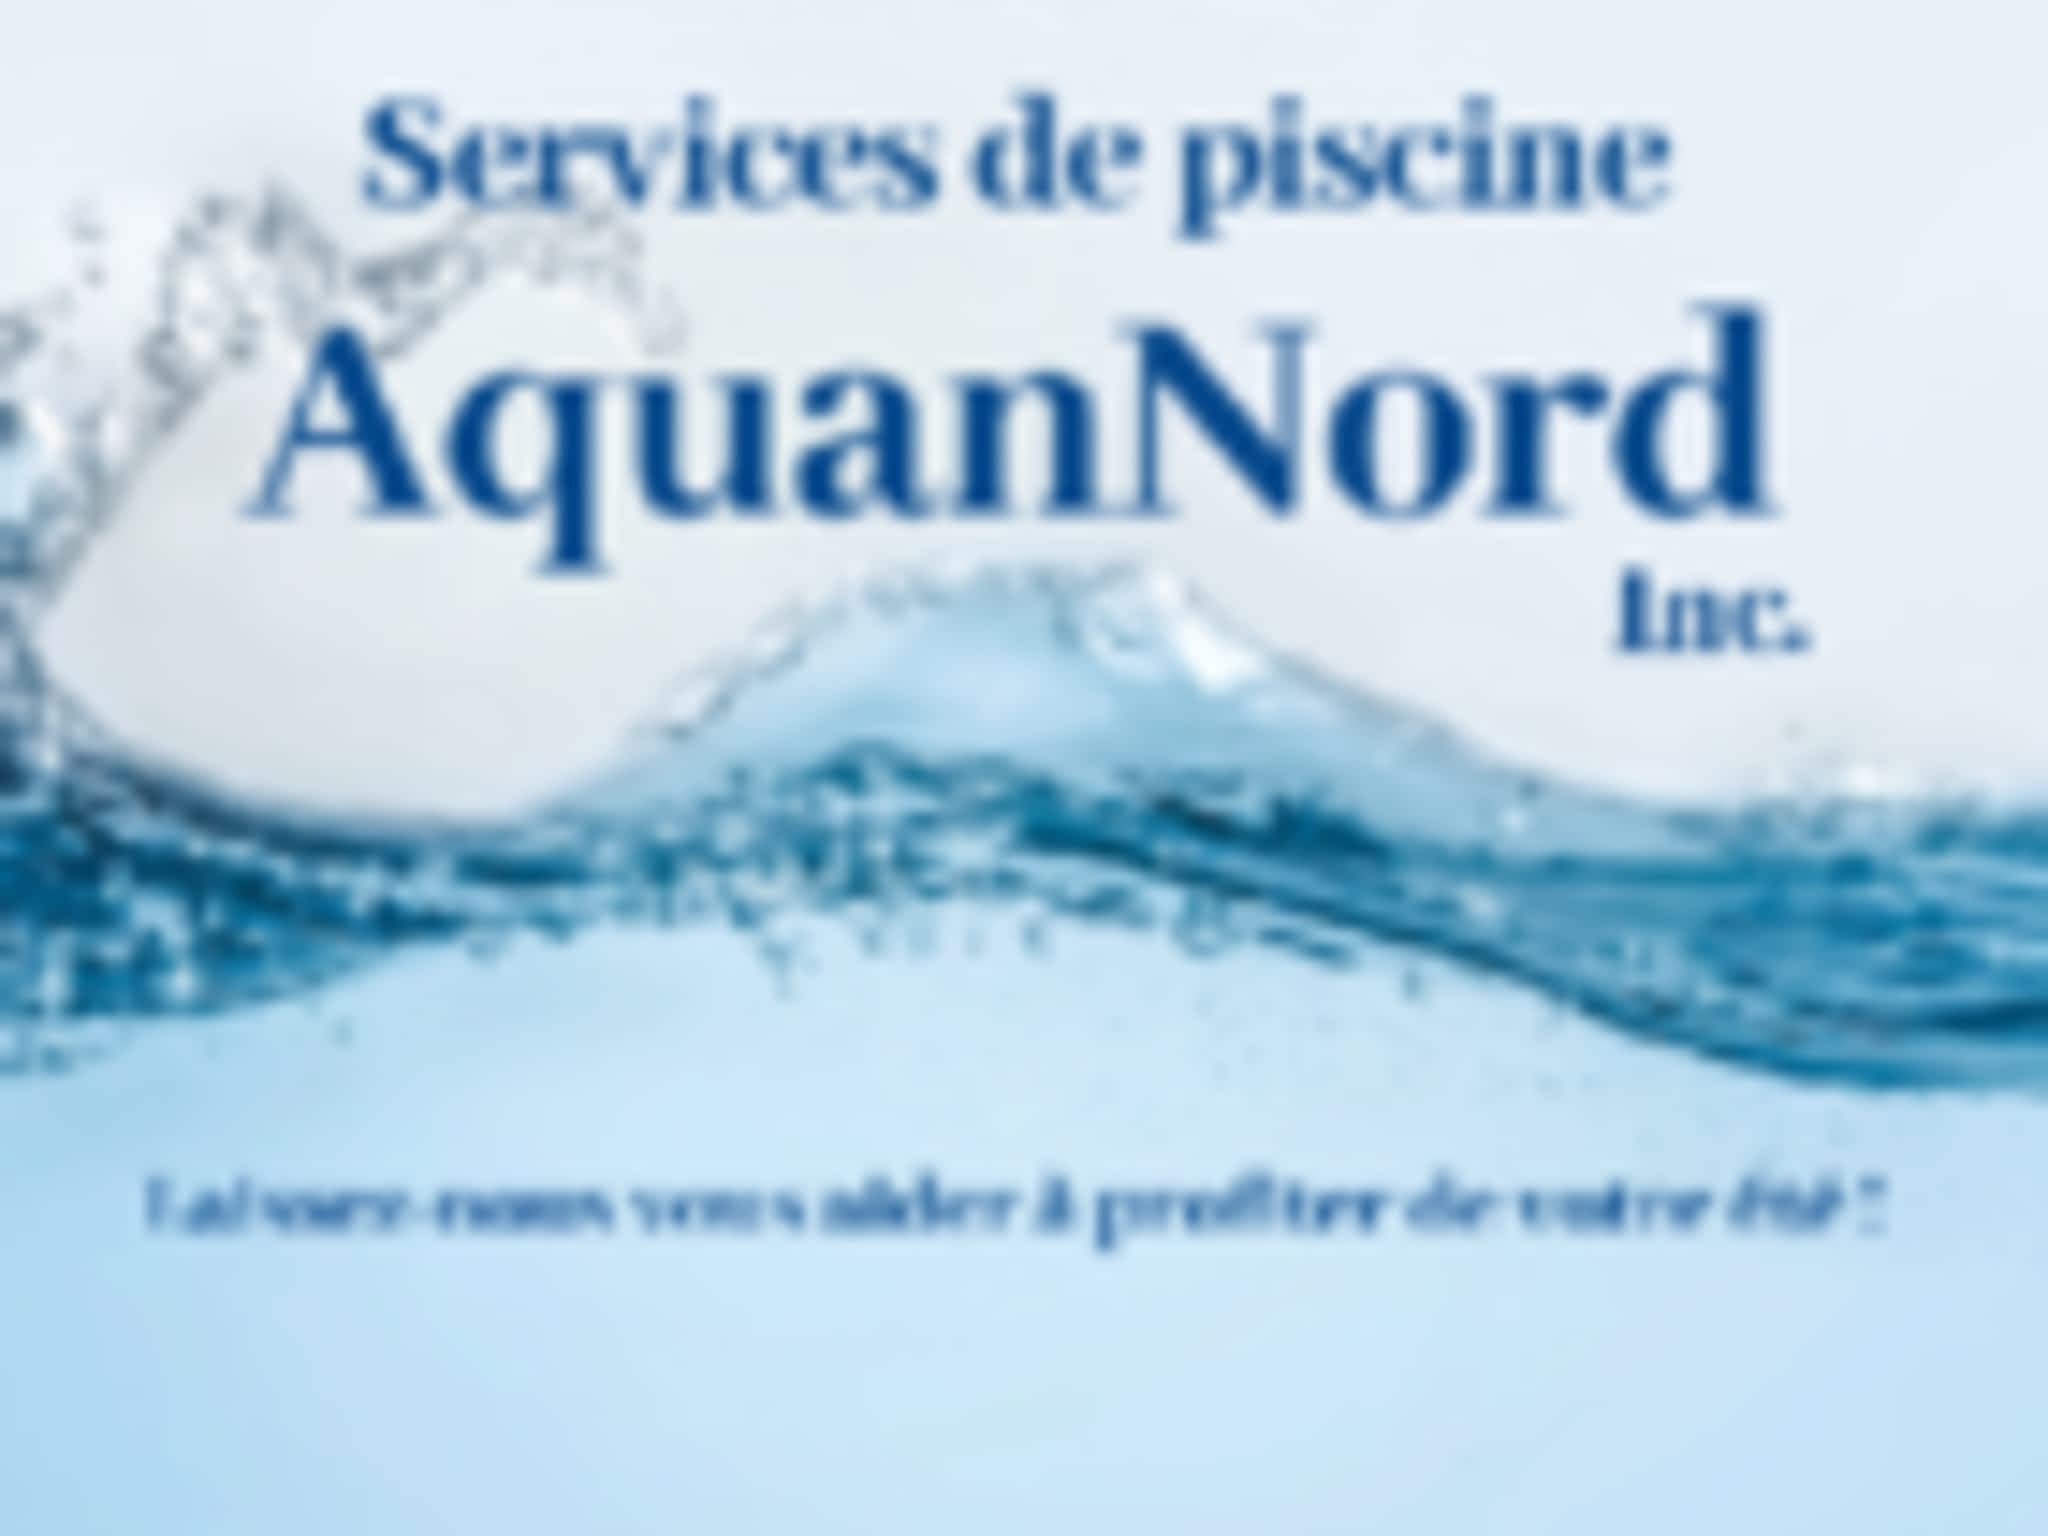 photo Services de piscine AquanNord Inc.